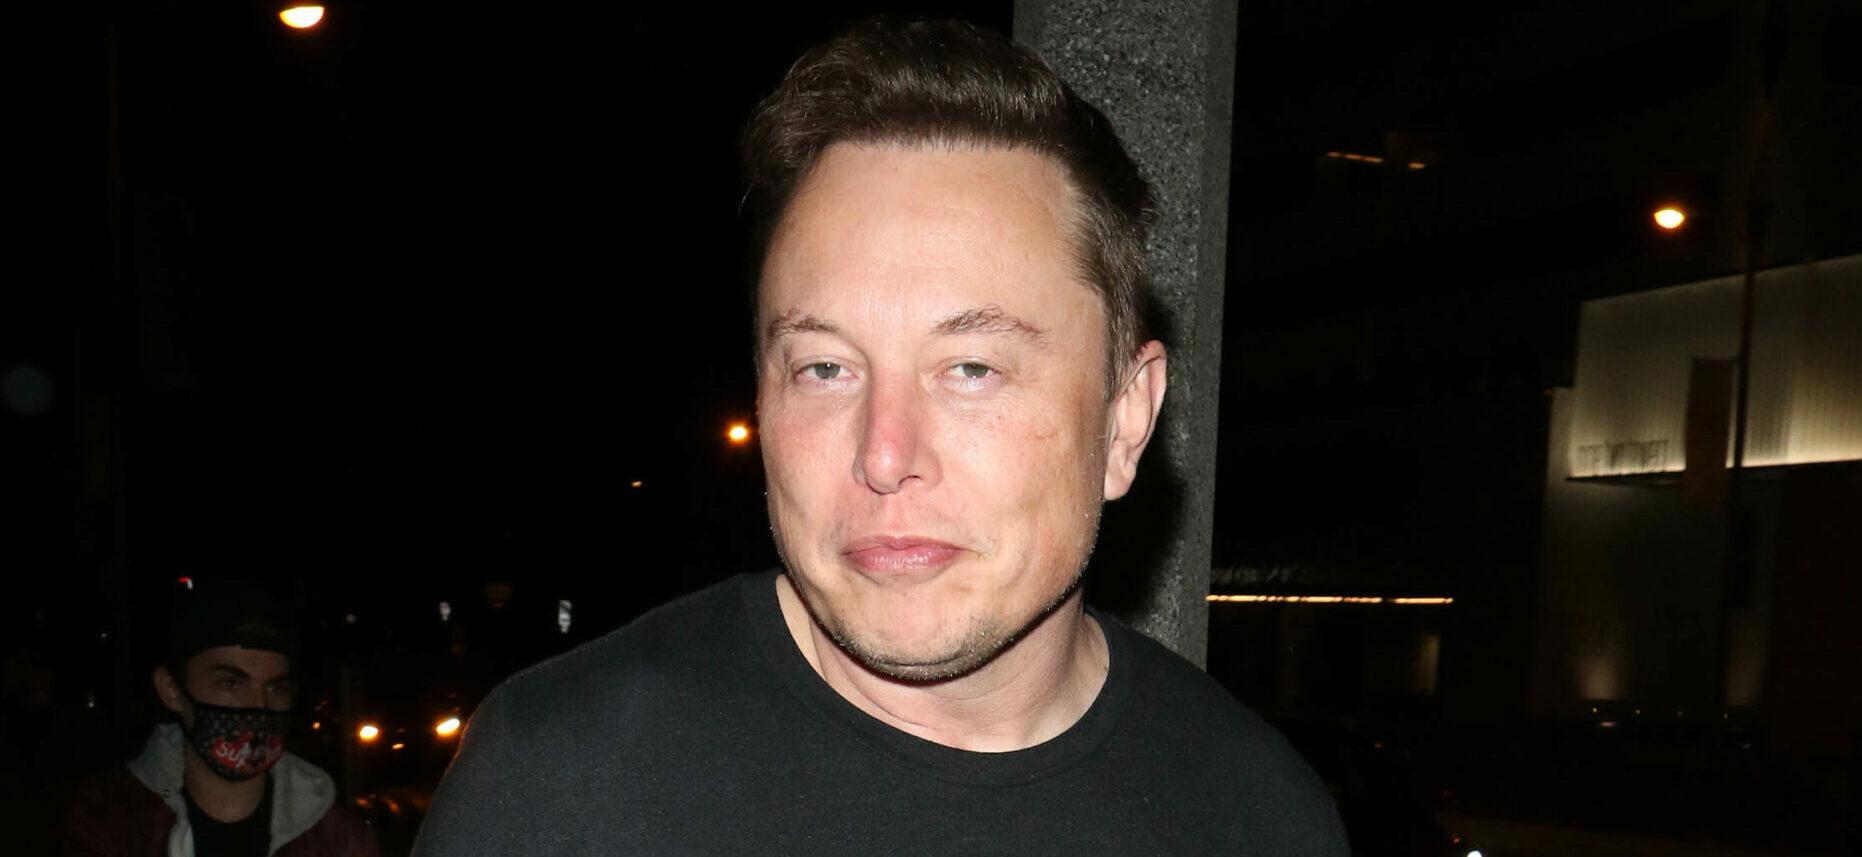 Elon Musk’s Latest Tweet Stirs Heated Debate On Twitter